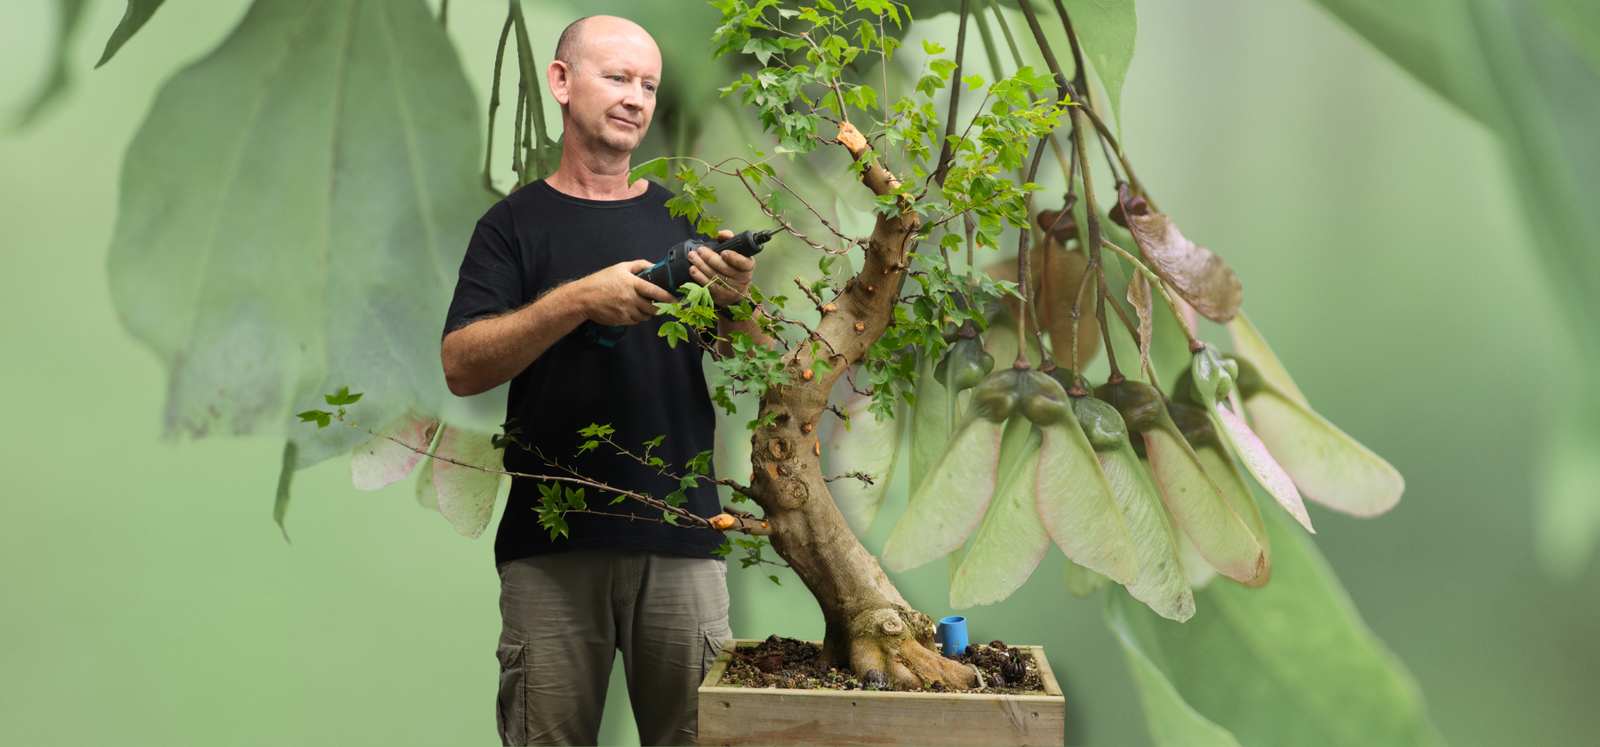 Bonsai Tree Bundle  Collection of 5 Seedlings –